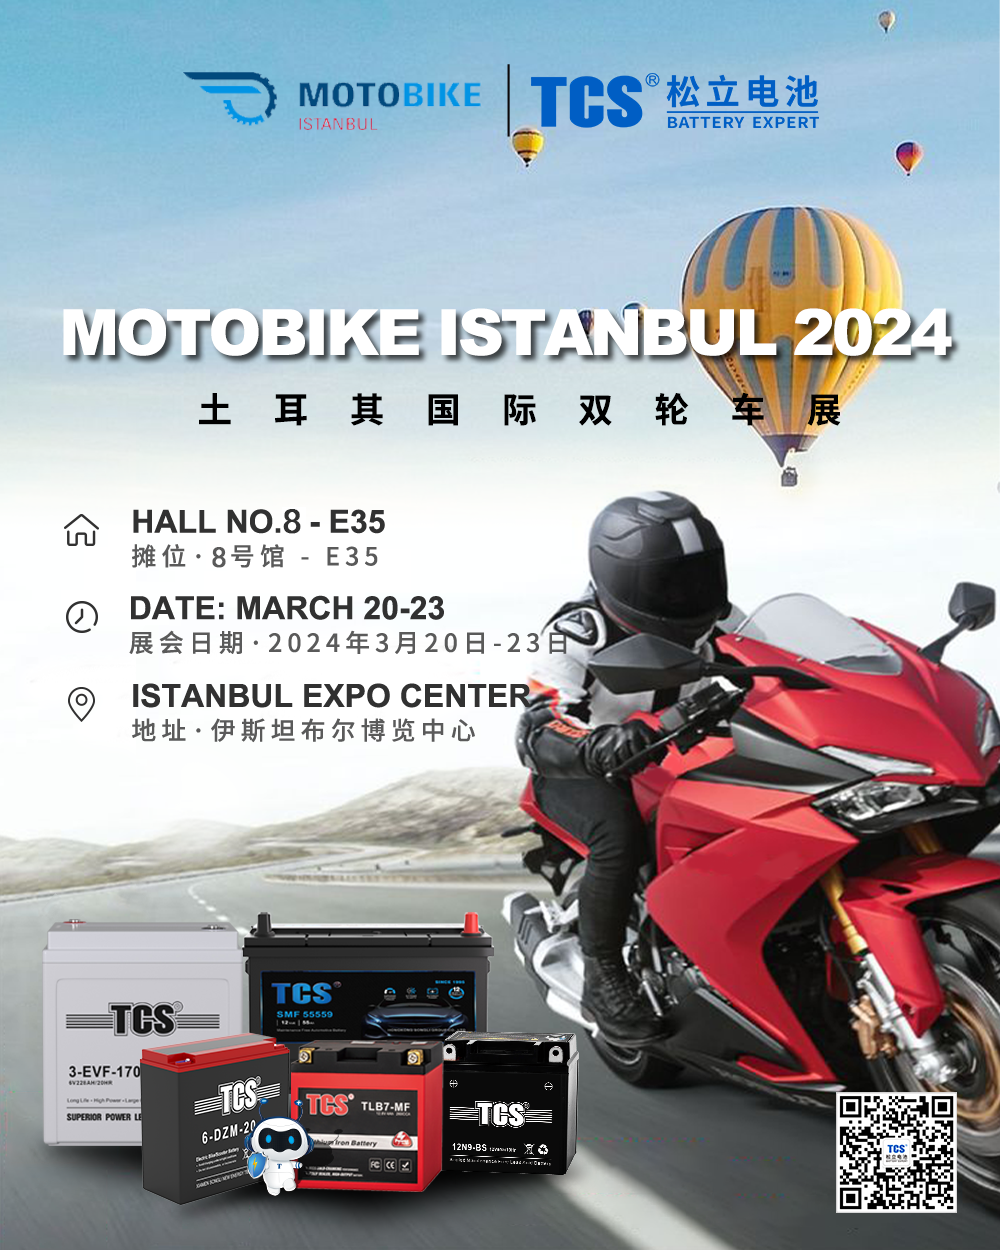 Motorcykel Istanbul 2024